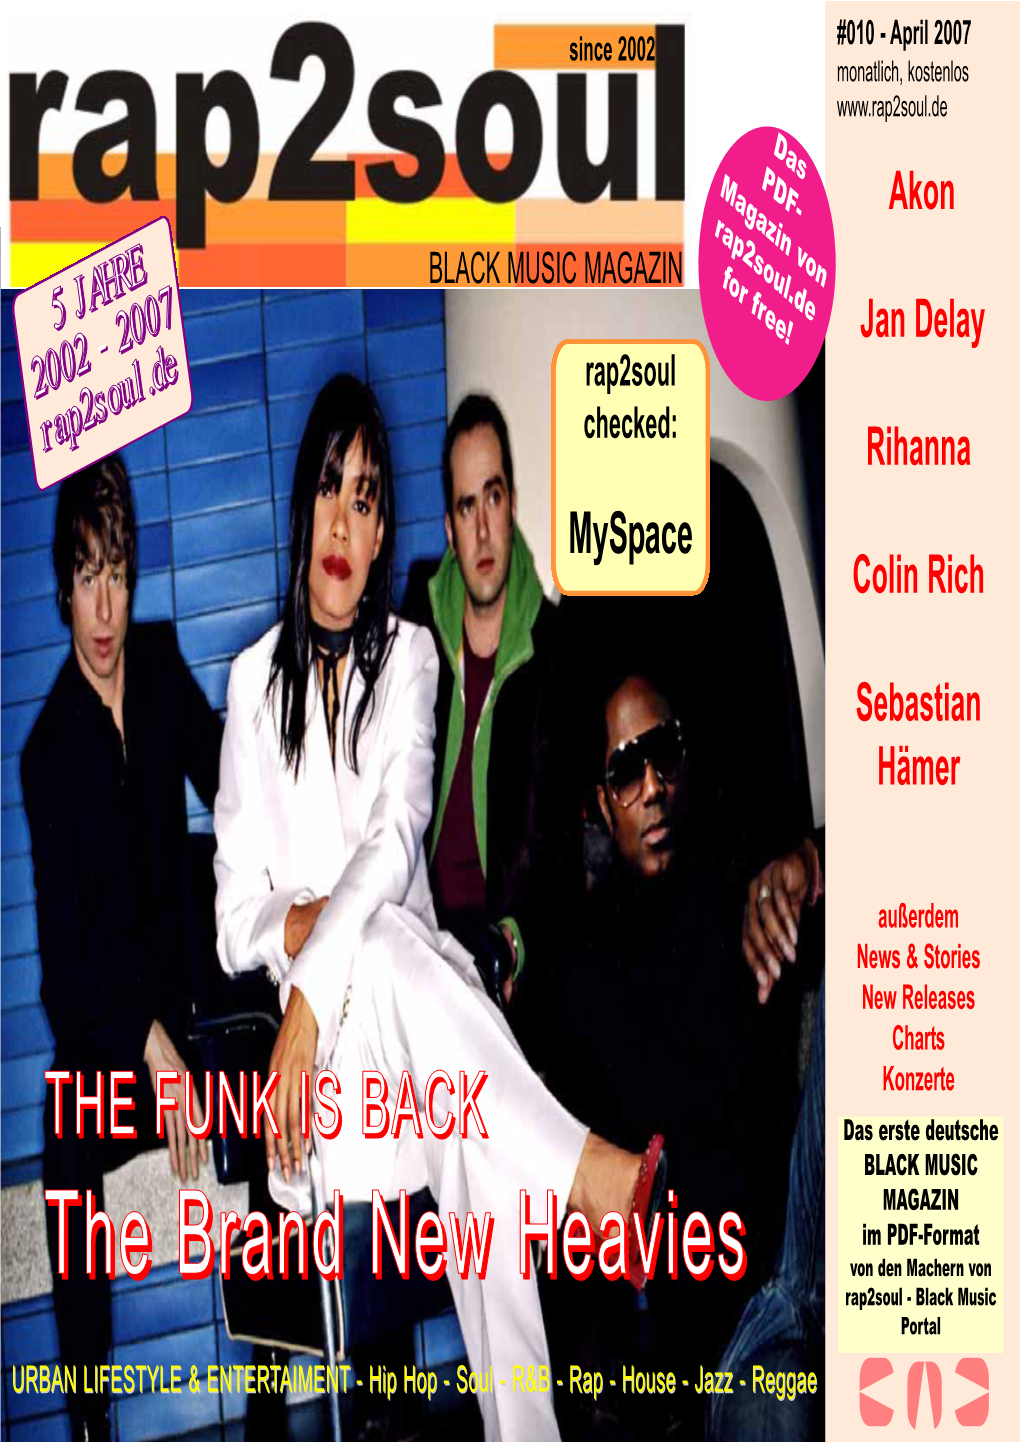 Black Music Magazin [#010